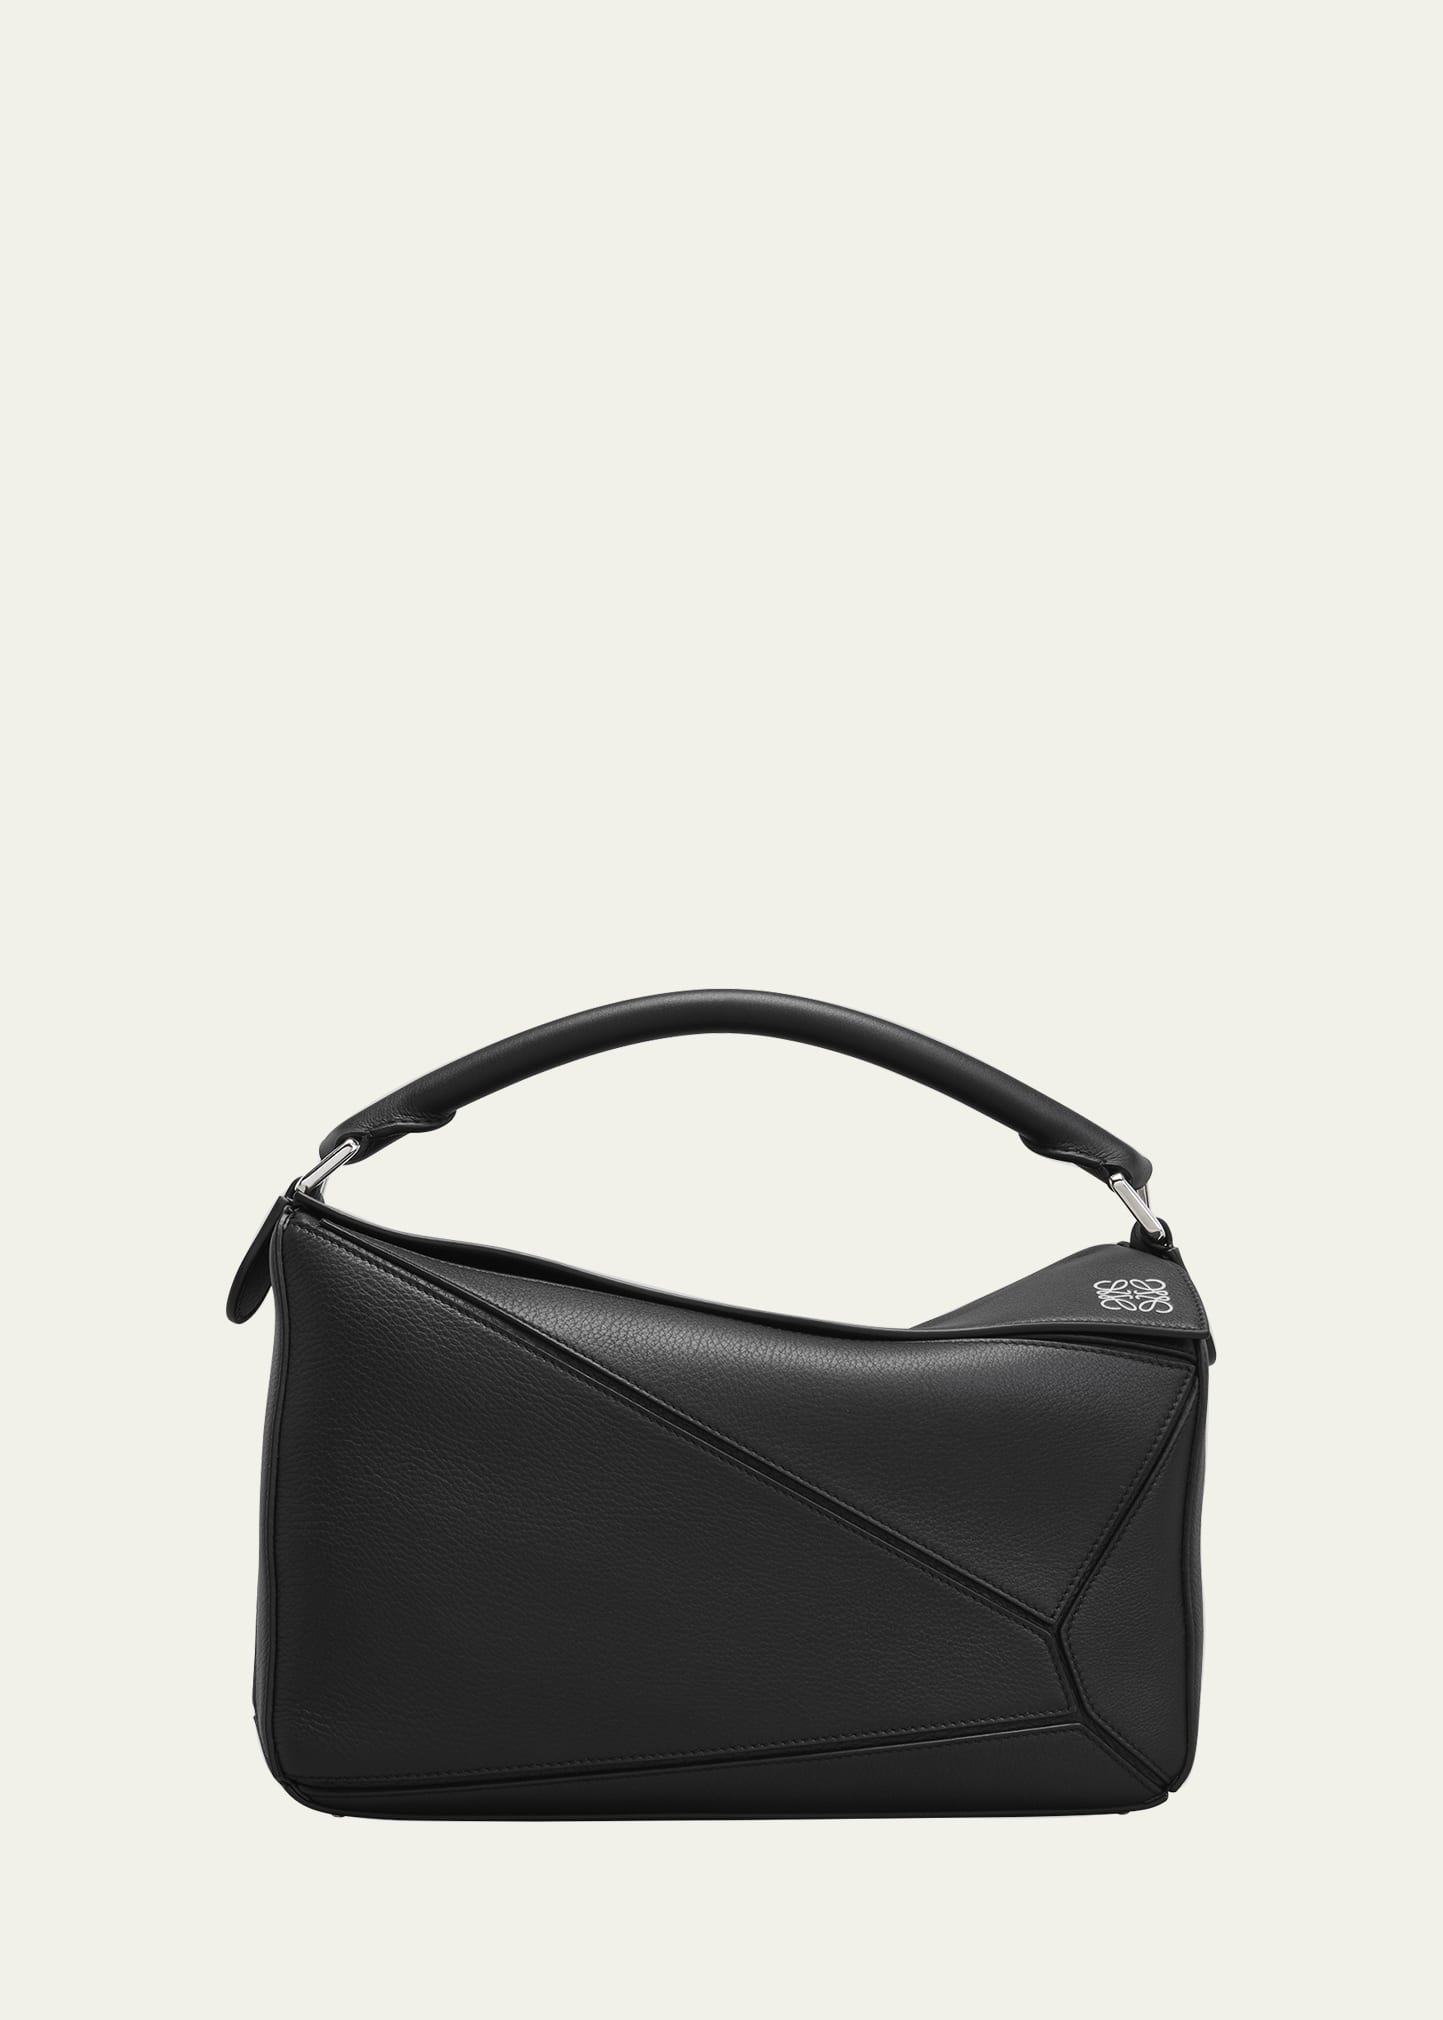 Help me pick color for Loewe Puzzle! : r/handbags